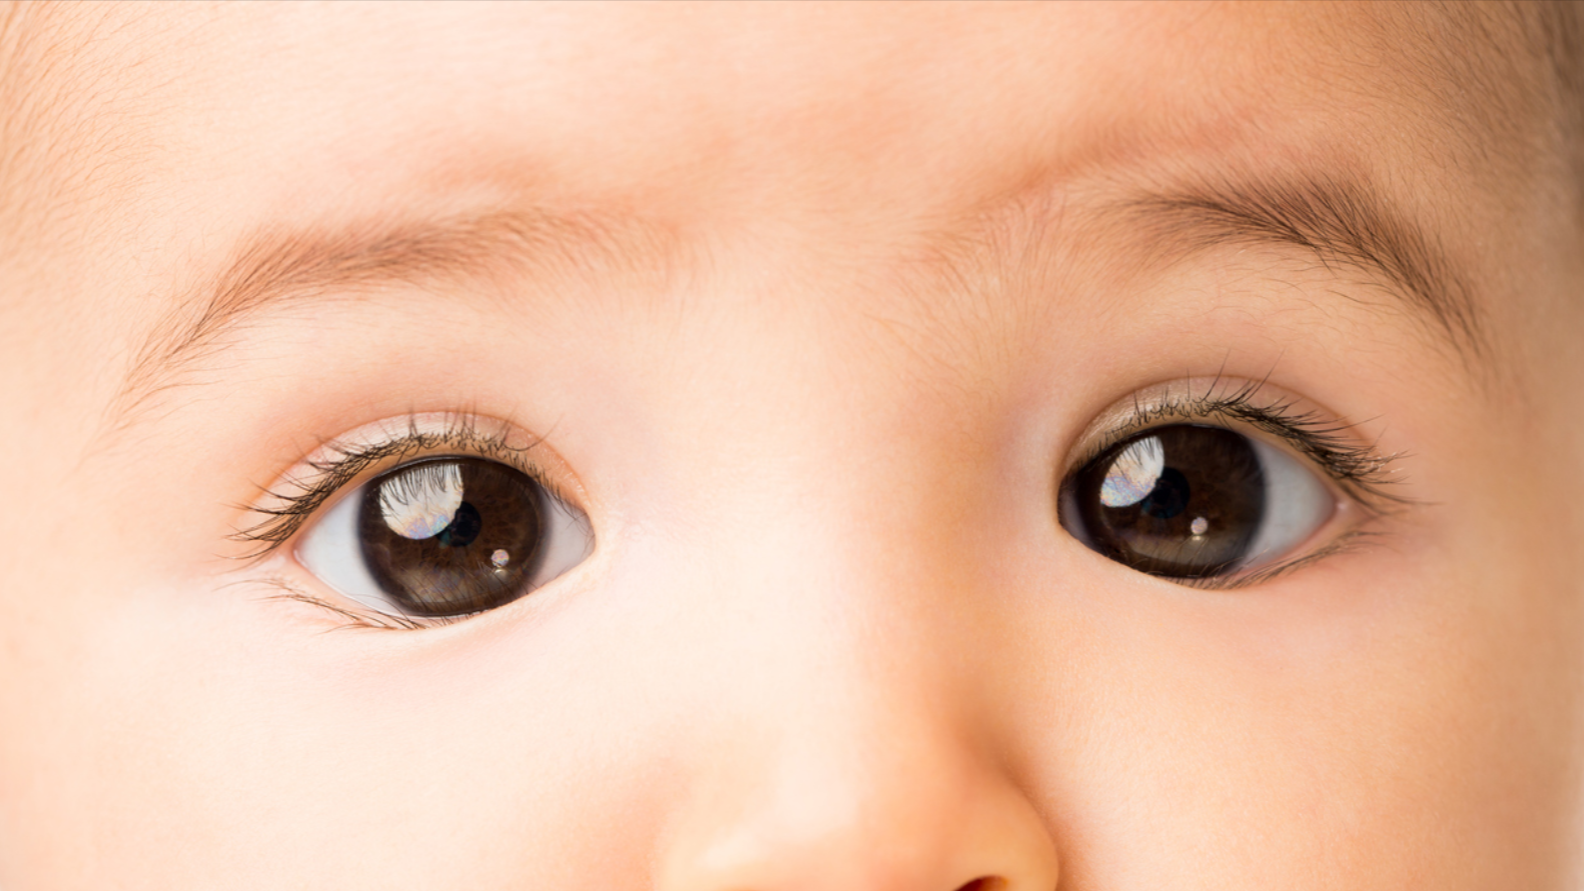 Ilustrasi mata juling pada bayi. Normalkah?